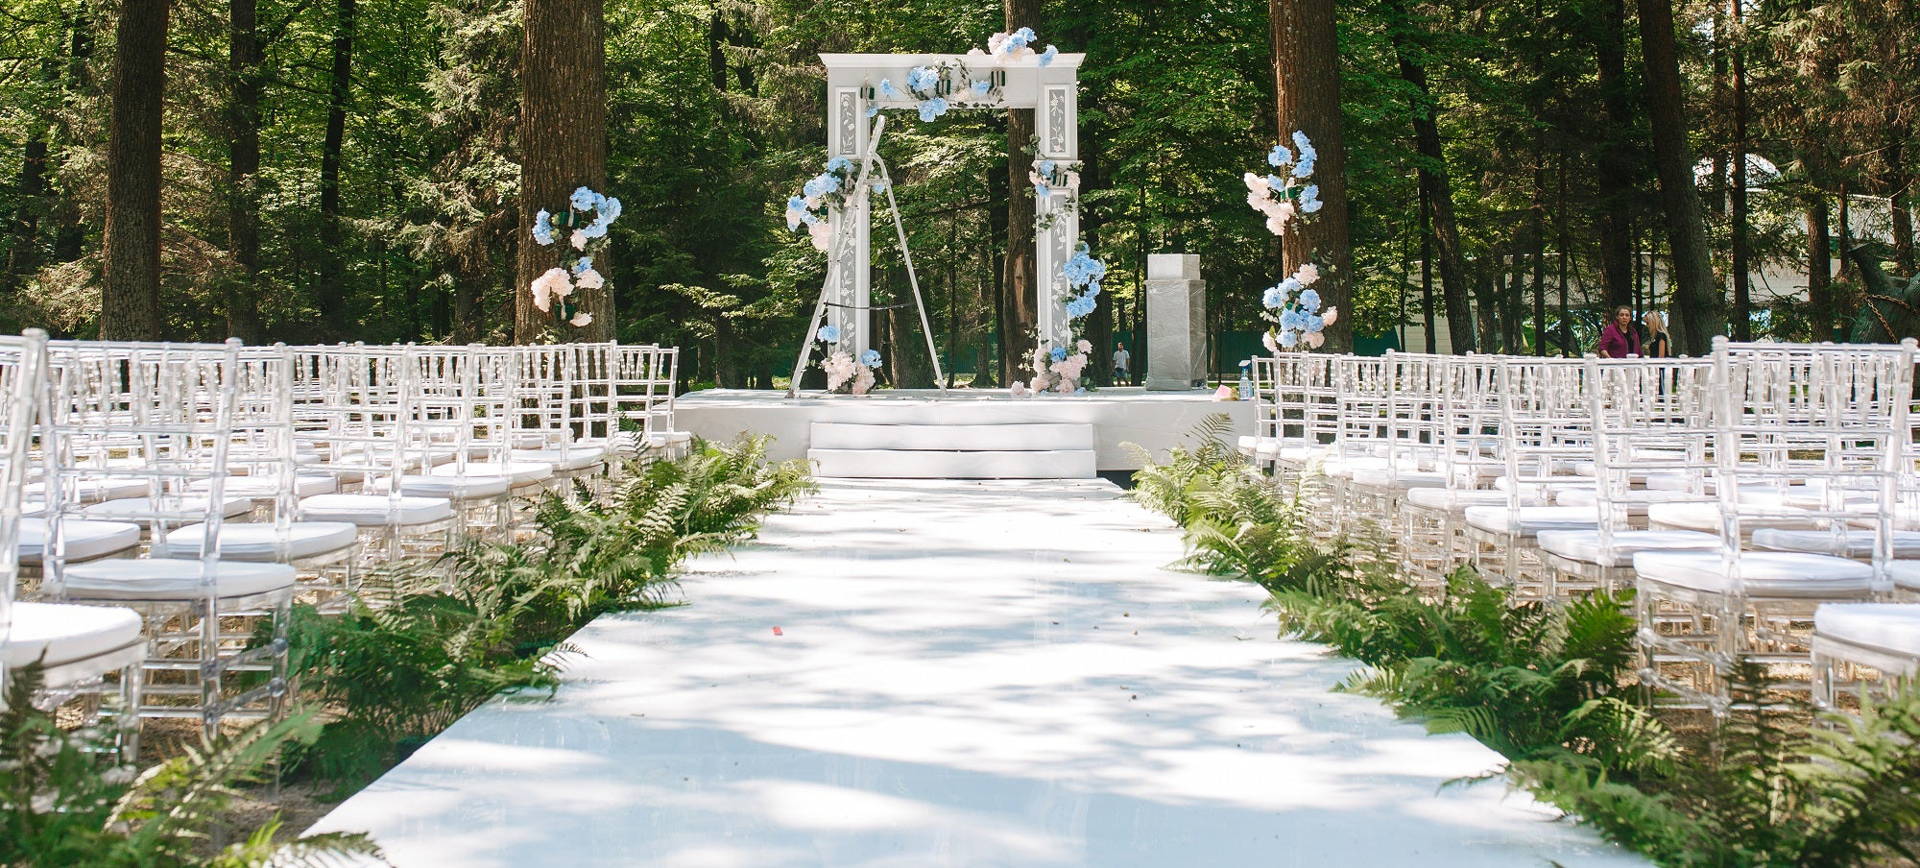 white aisle runner in an outdoor wedding setup